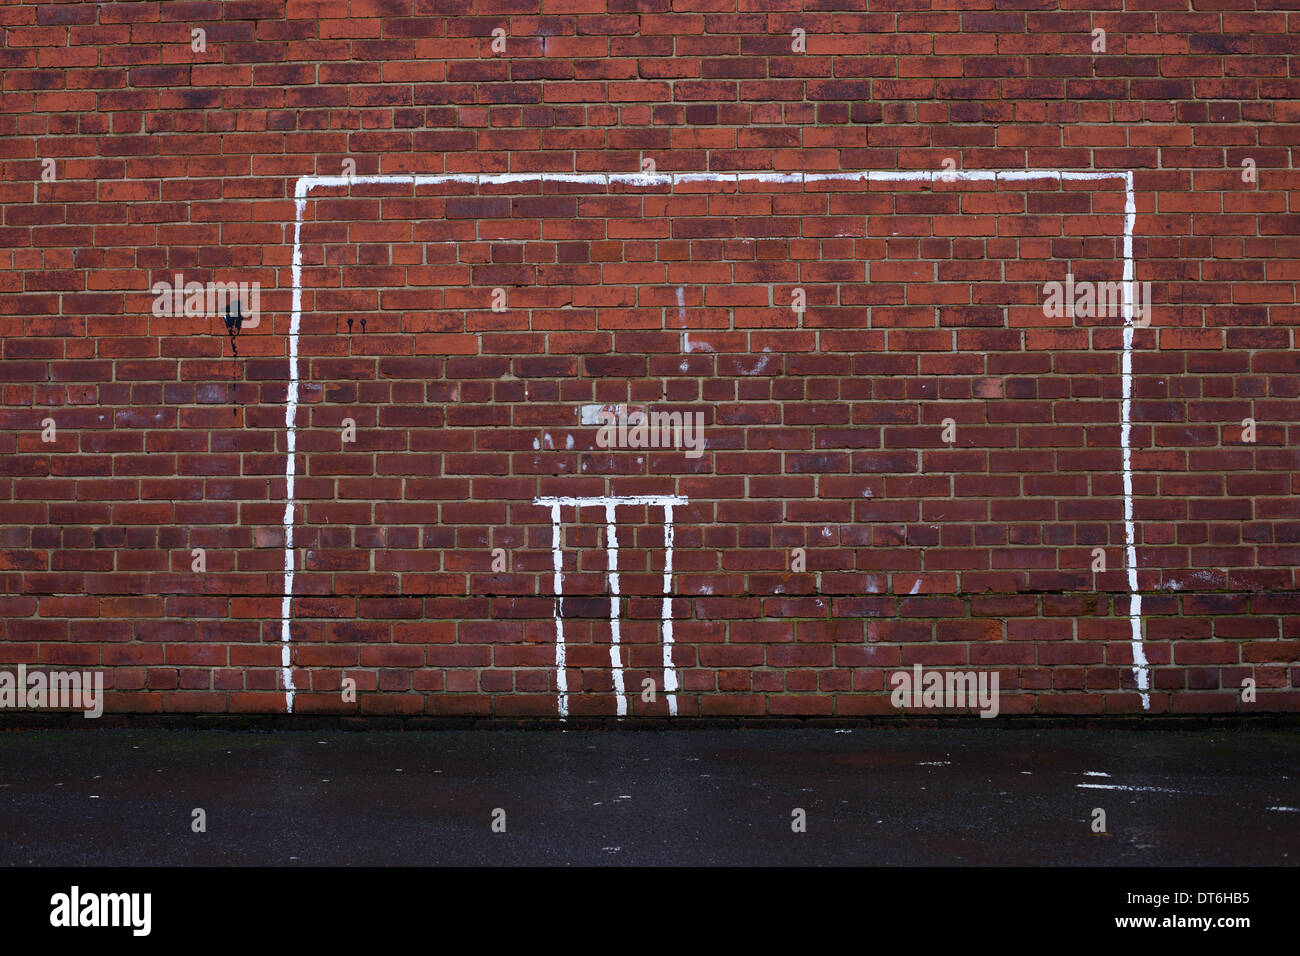 Cricket stumps & goalposts painted on a brick wall Stock Photo